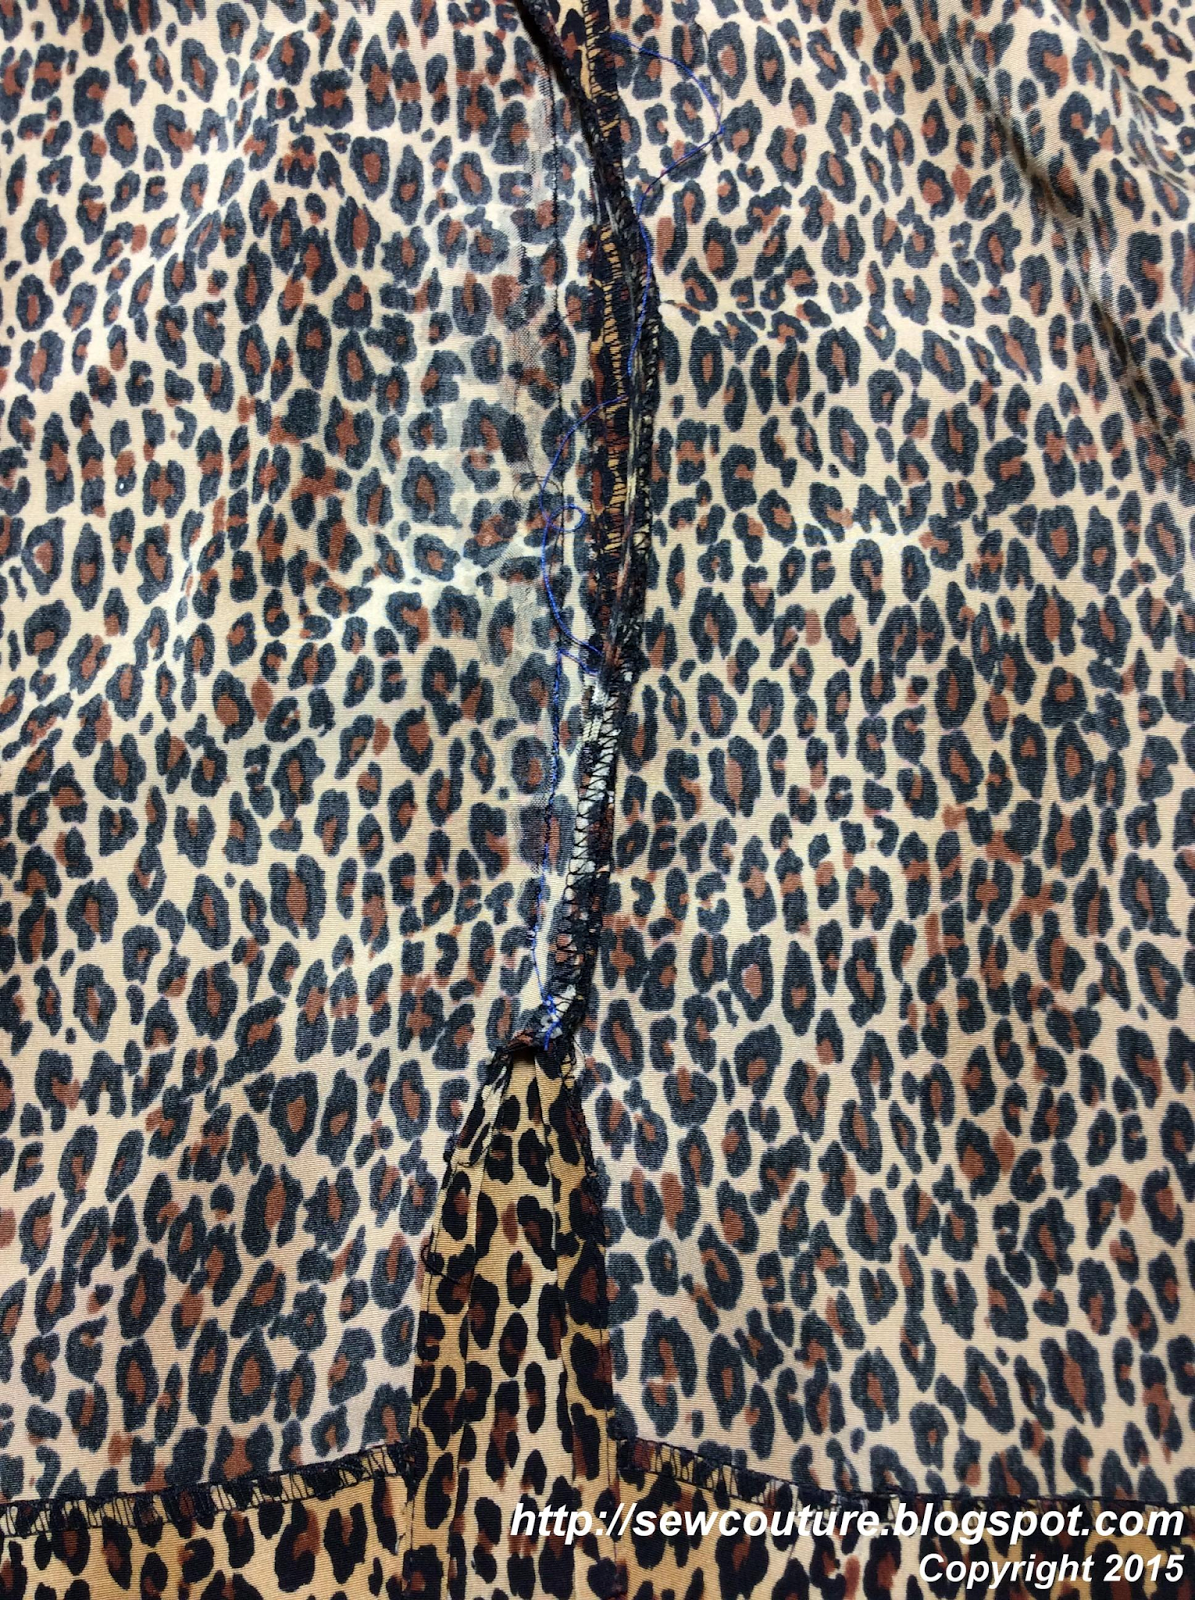 Sew Couture...: Rebirth of a Leopard...